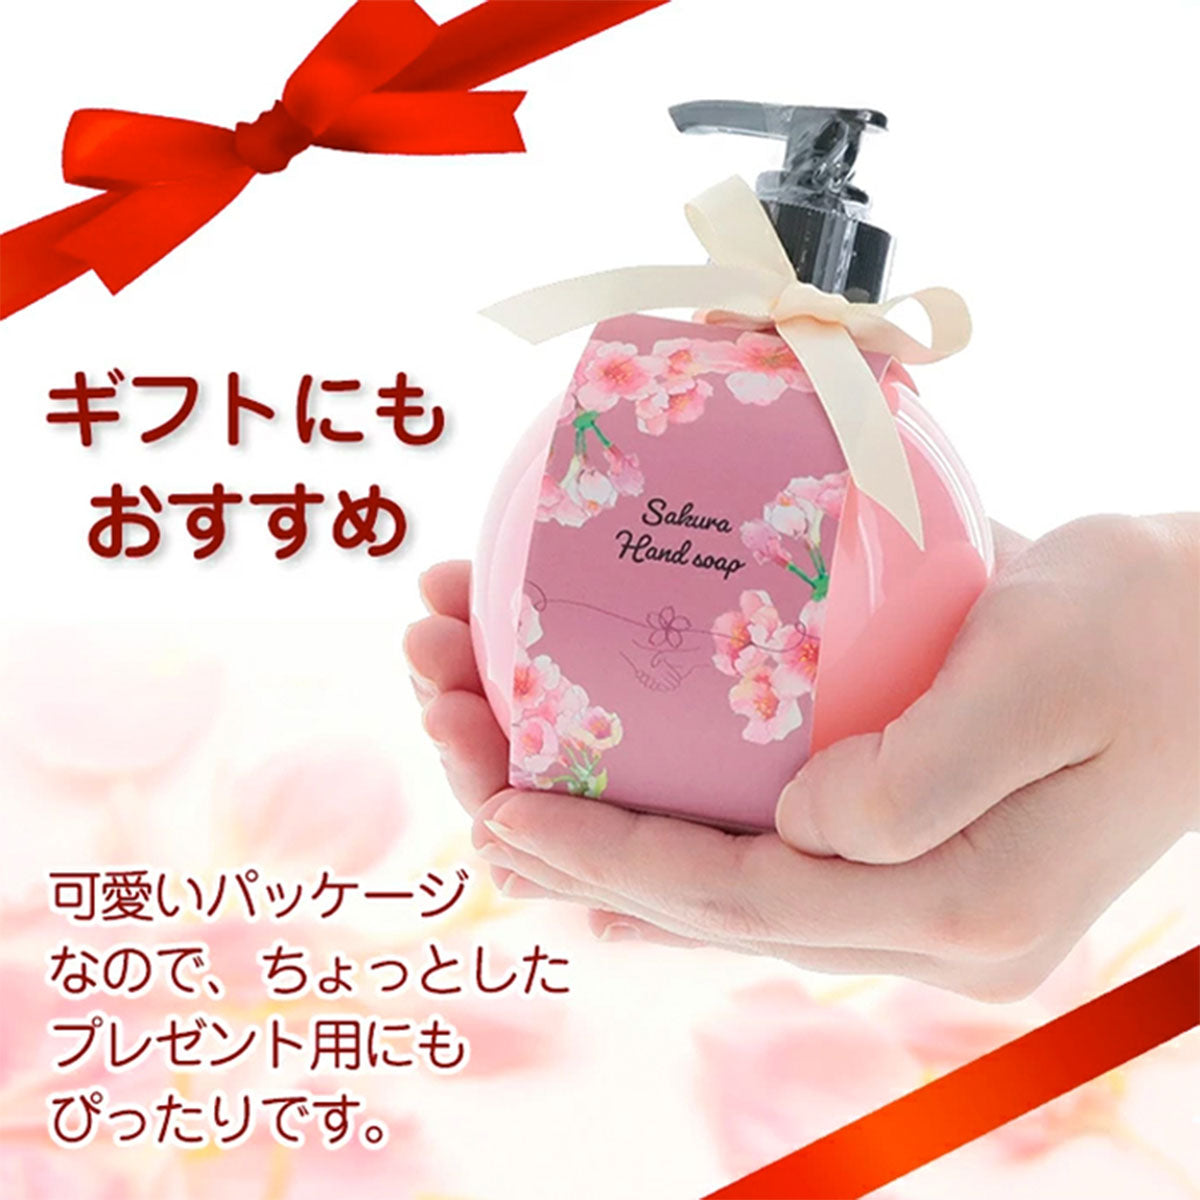 SAKURA Hand Soap Spring Limited